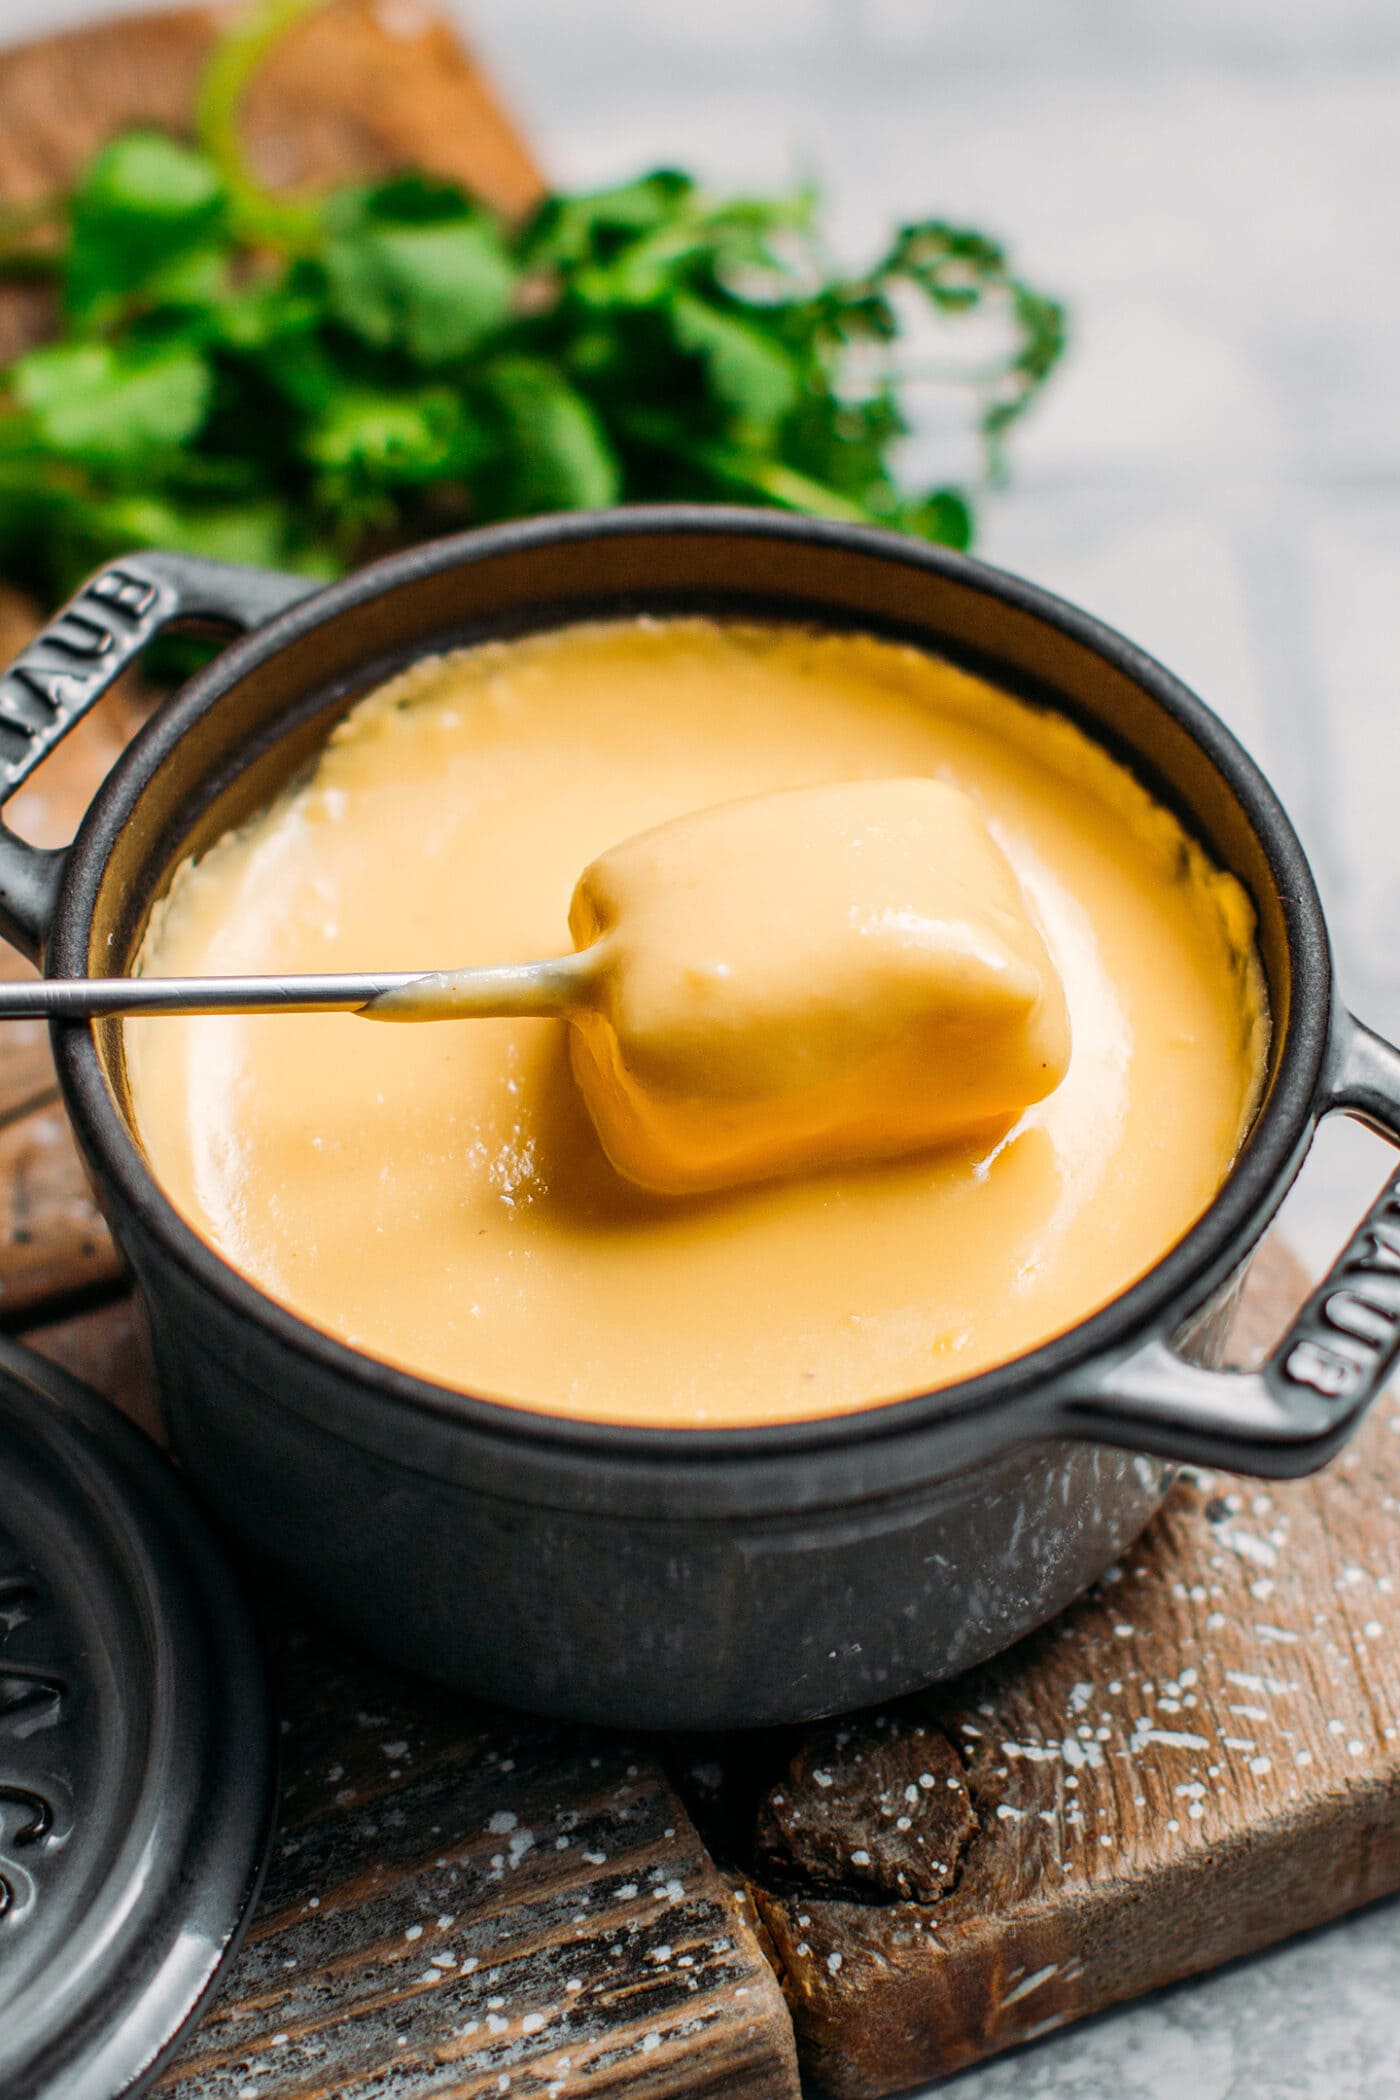 Dipping bread into vegan fondue.